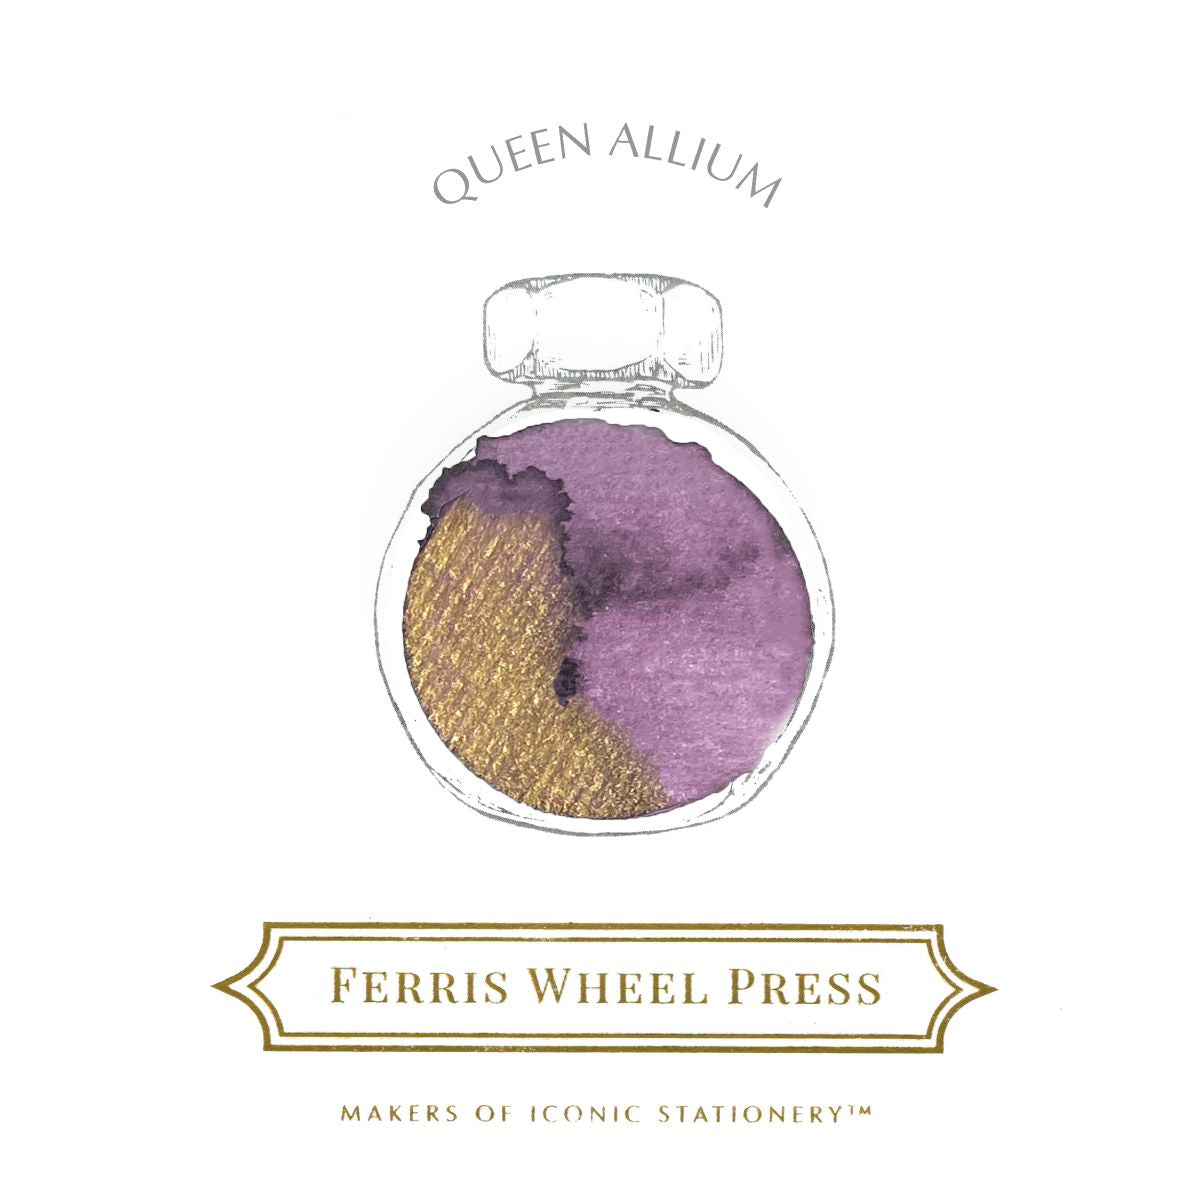 Ferris Wheel Press - Queen Allium, 38 ml